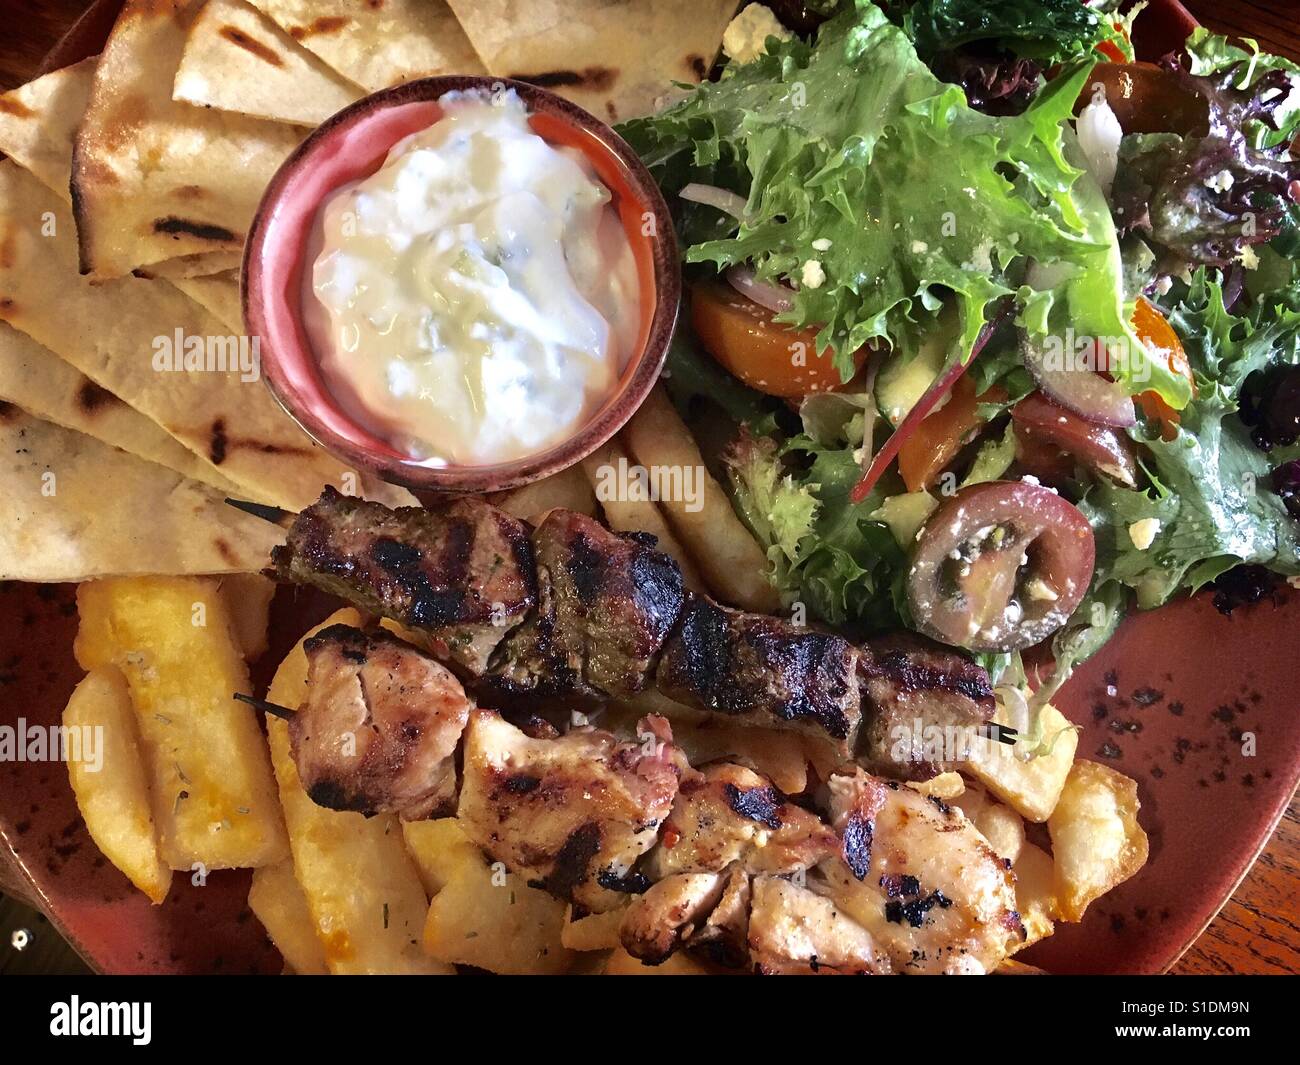 Souvlaki, peta, hot chips, sauce & salad' Stock Photo